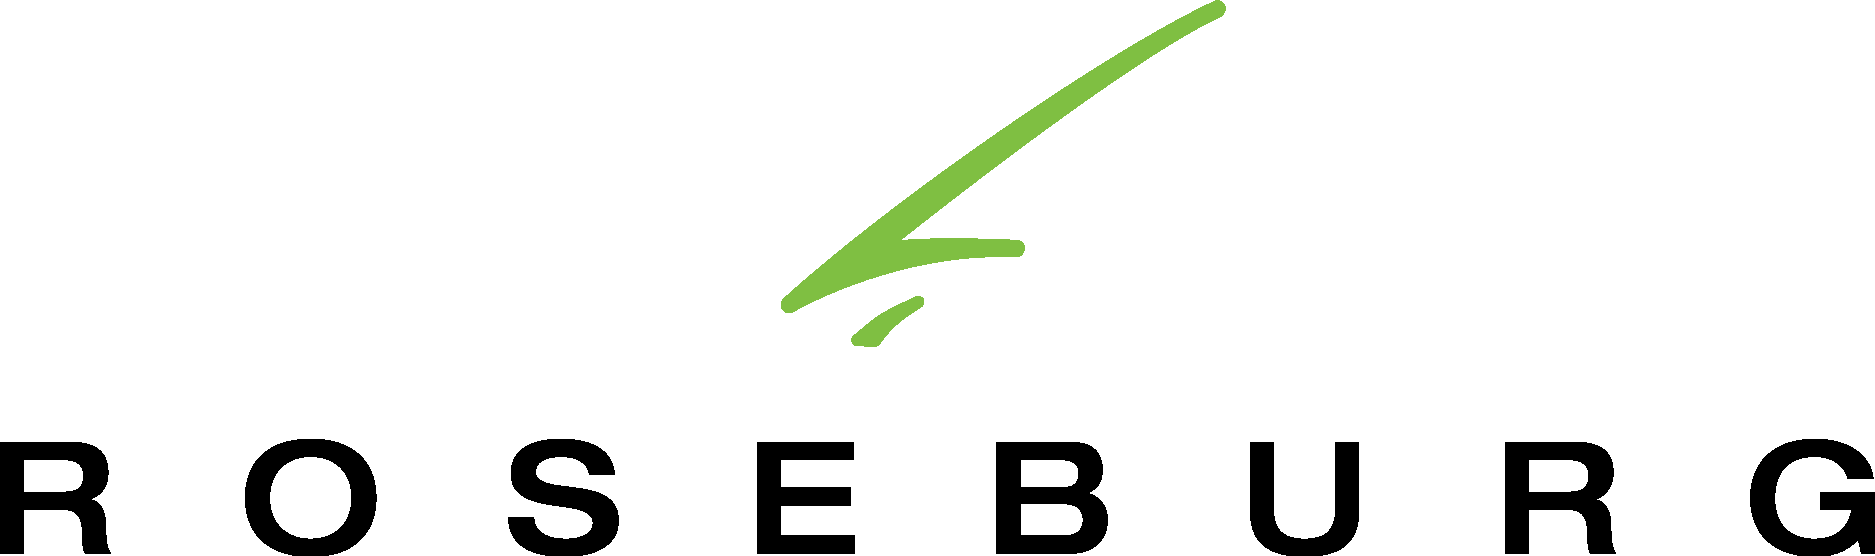 Roseburg Logo Vector